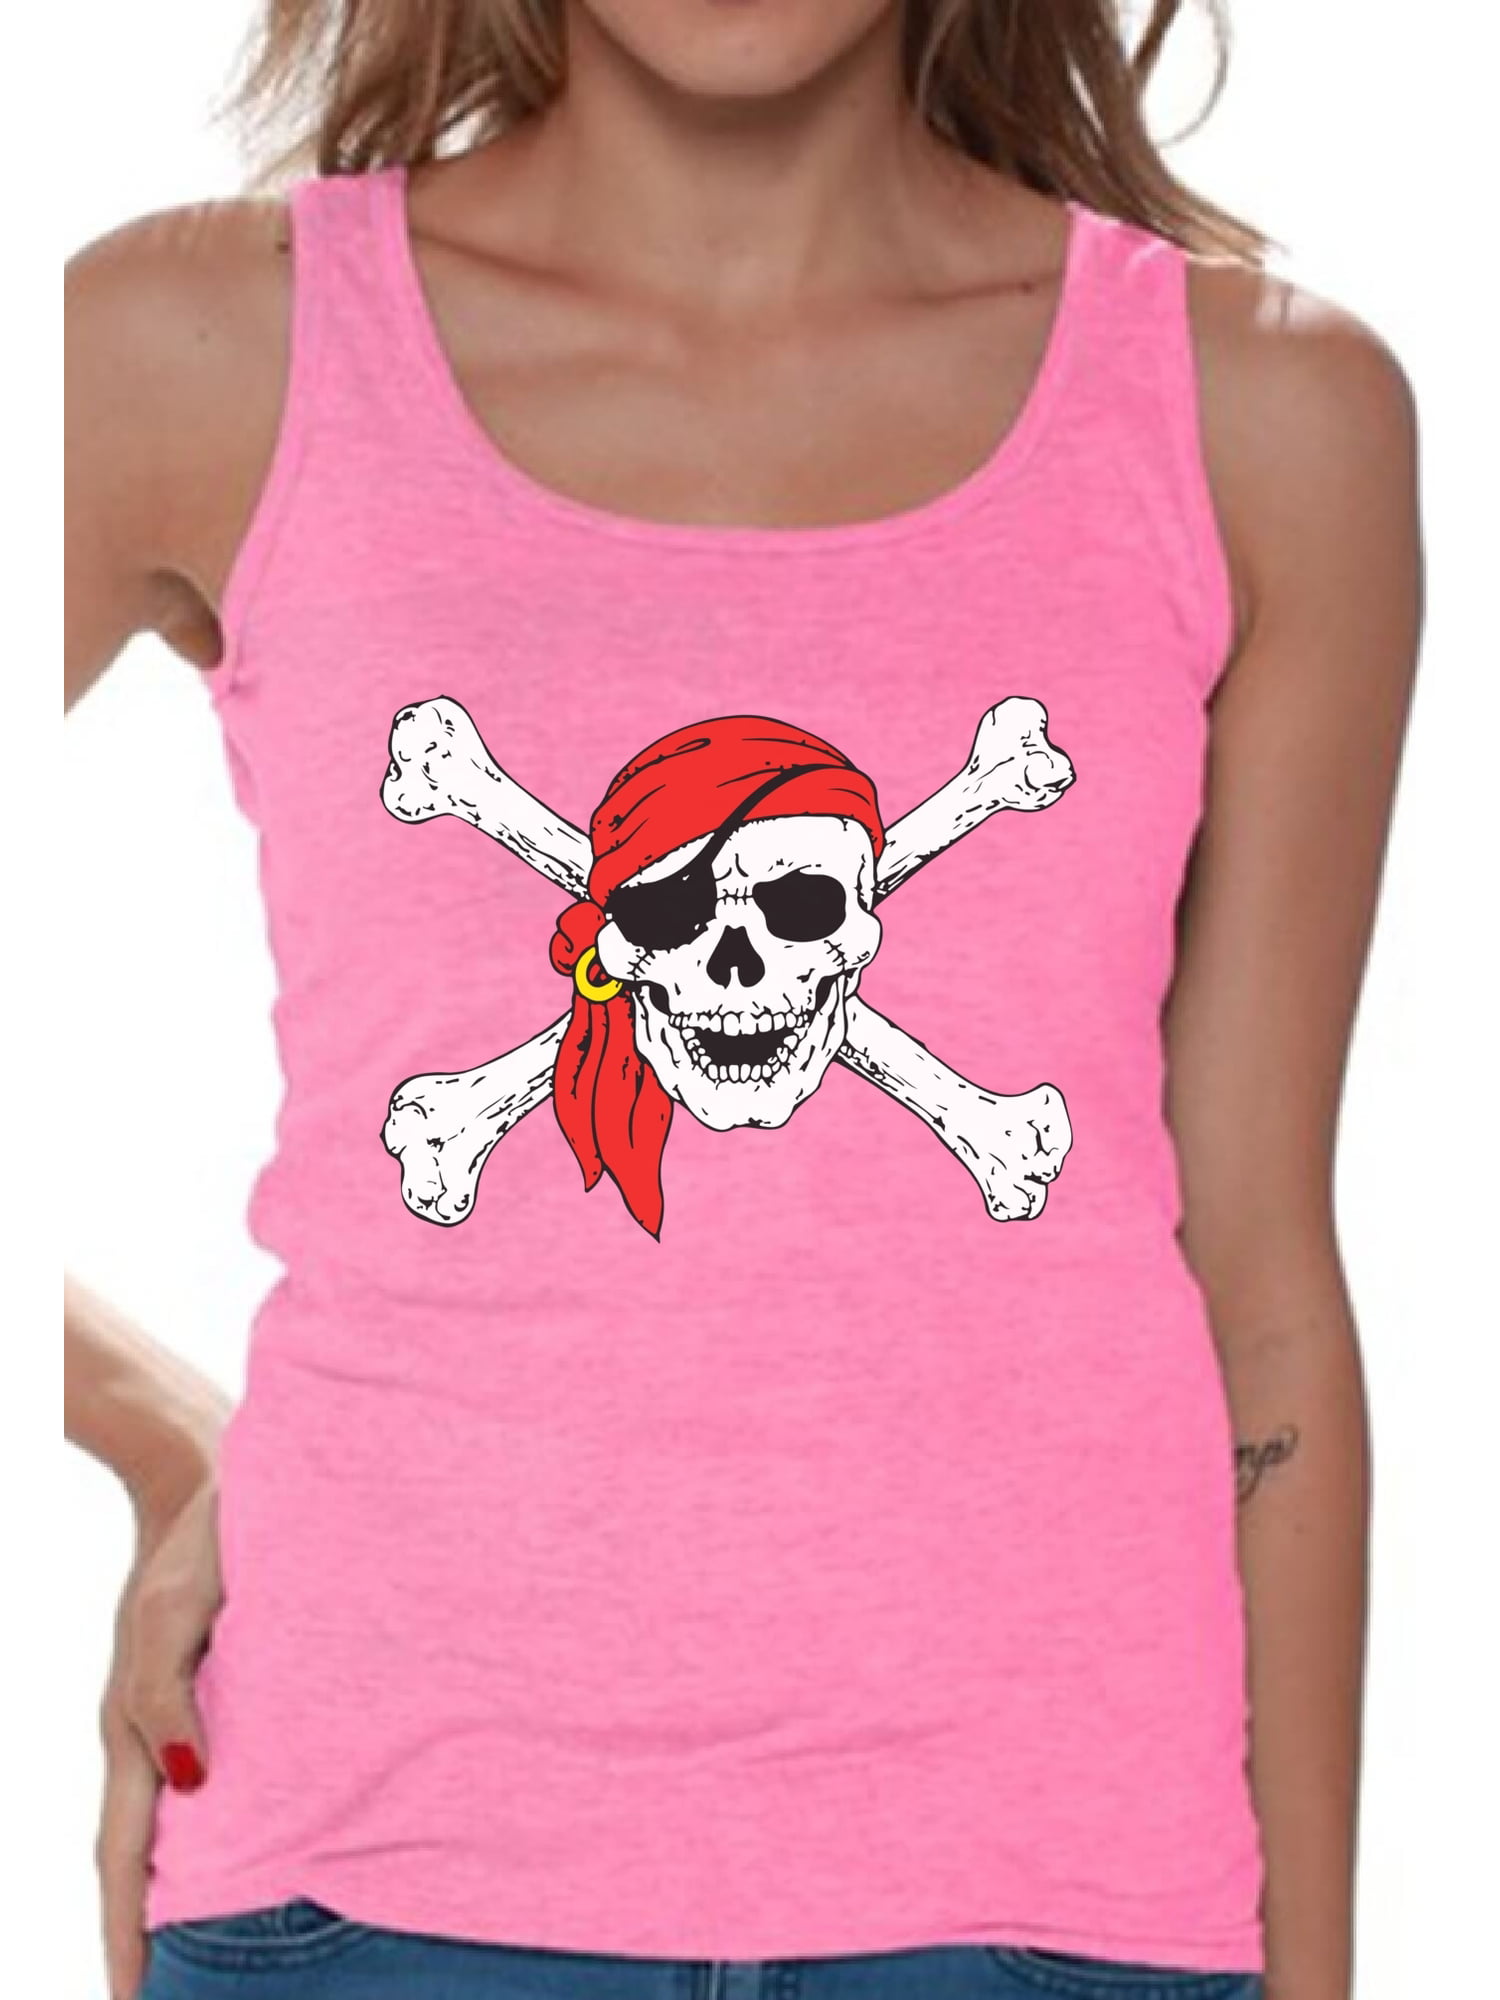 shop4ever Pirate Skull & Crossbones Womens Tank Top Pirate Flag Tank Tops 